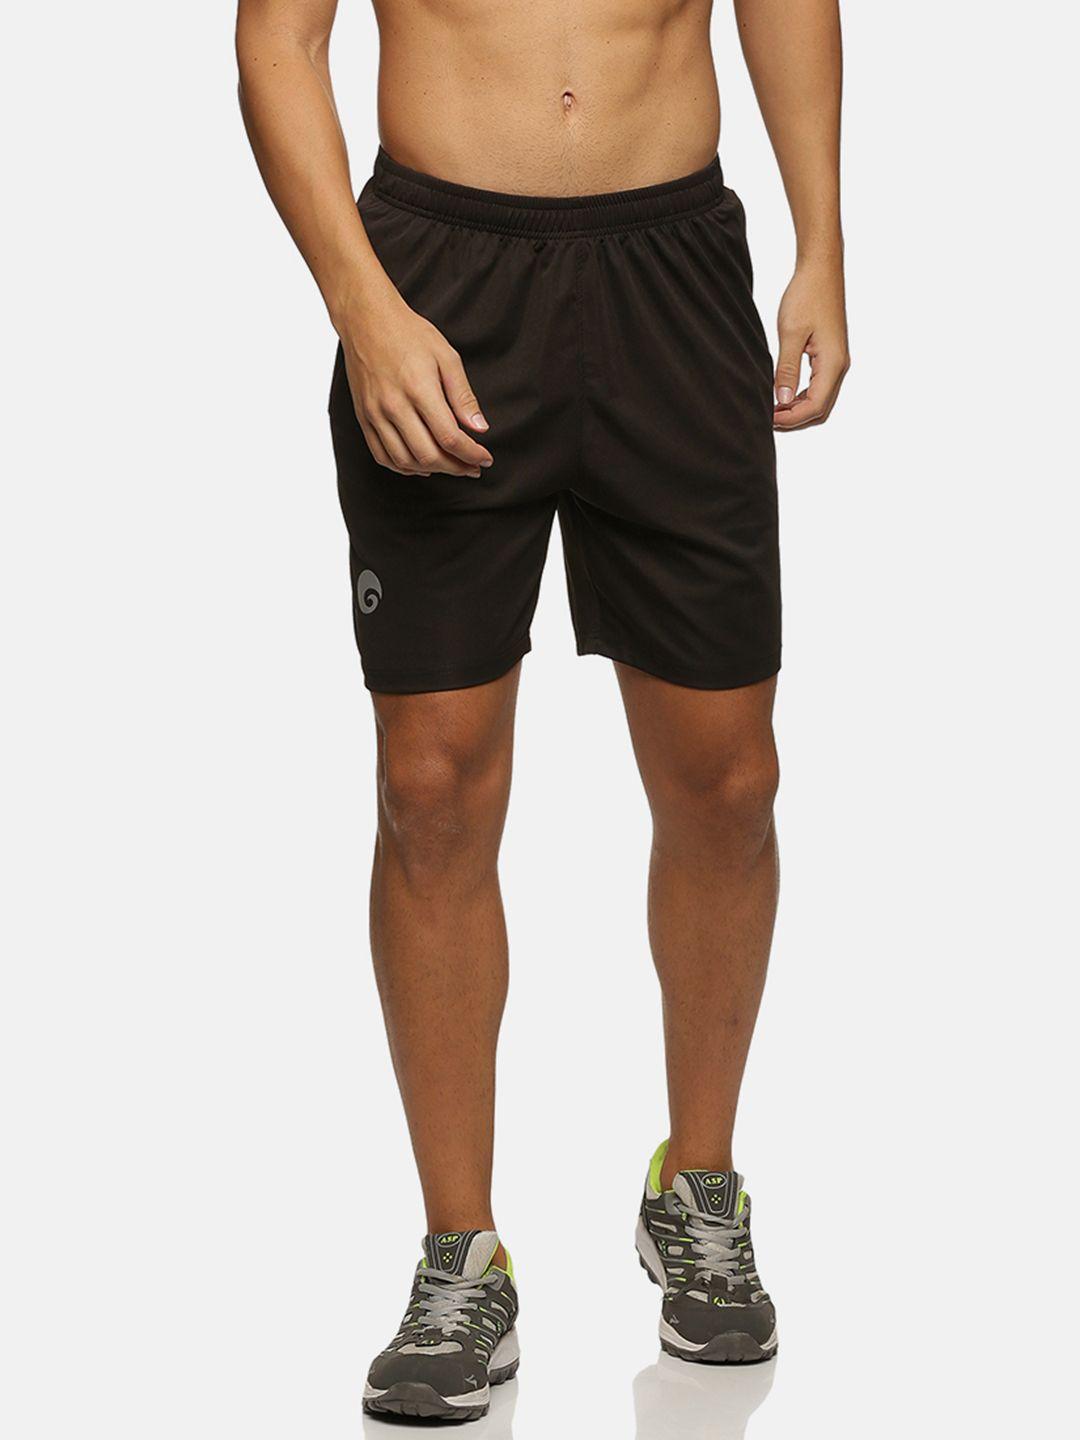 omtex-men-cotton-training-sports-shorts